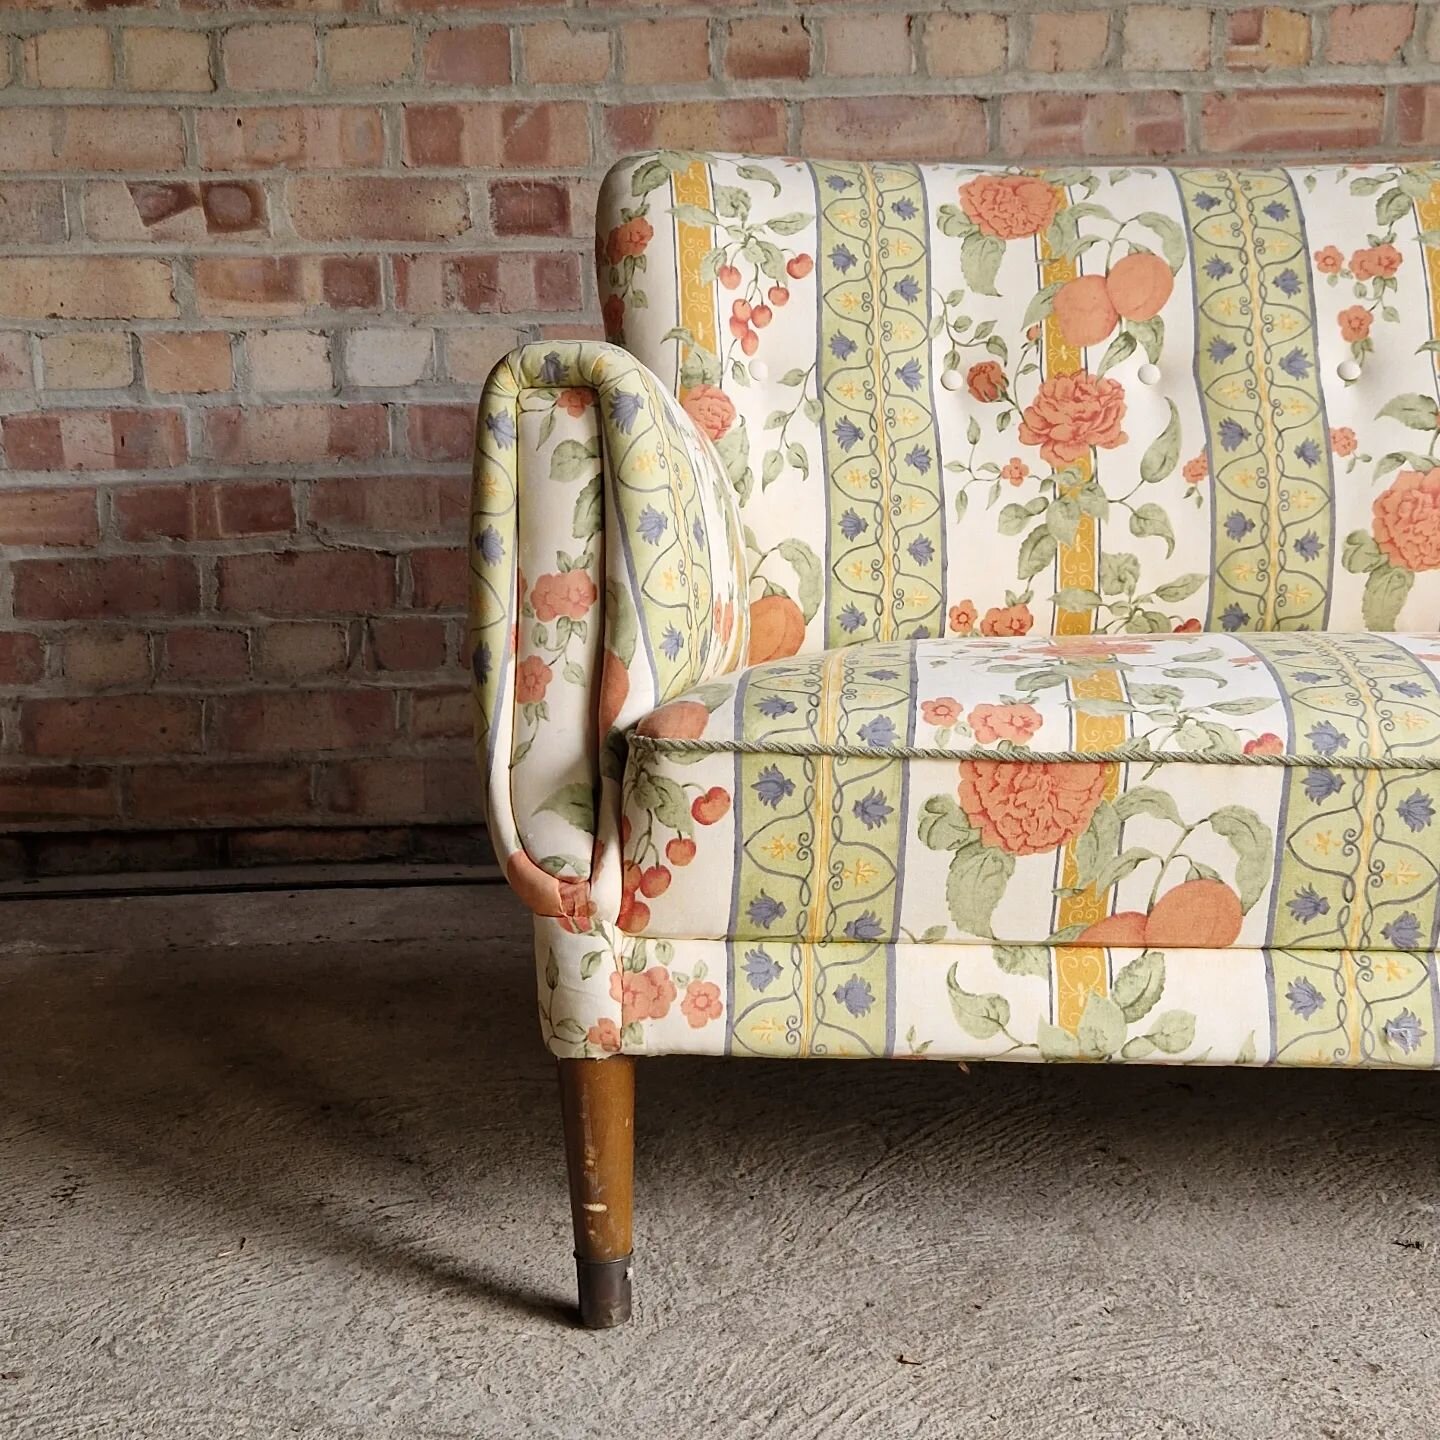 Fritz Hansen Three Seater Sofa, Denmark.
Available online soon. 
.
Don't like the fabric? Get it restored to your preference. 
.
.
.#SneakPeak #DanishModern #LoungeInLuxury  #1940sRetro #FurnitureTreasures #SiteUpdate #ChairsWeLove #MidCenturyChic #N